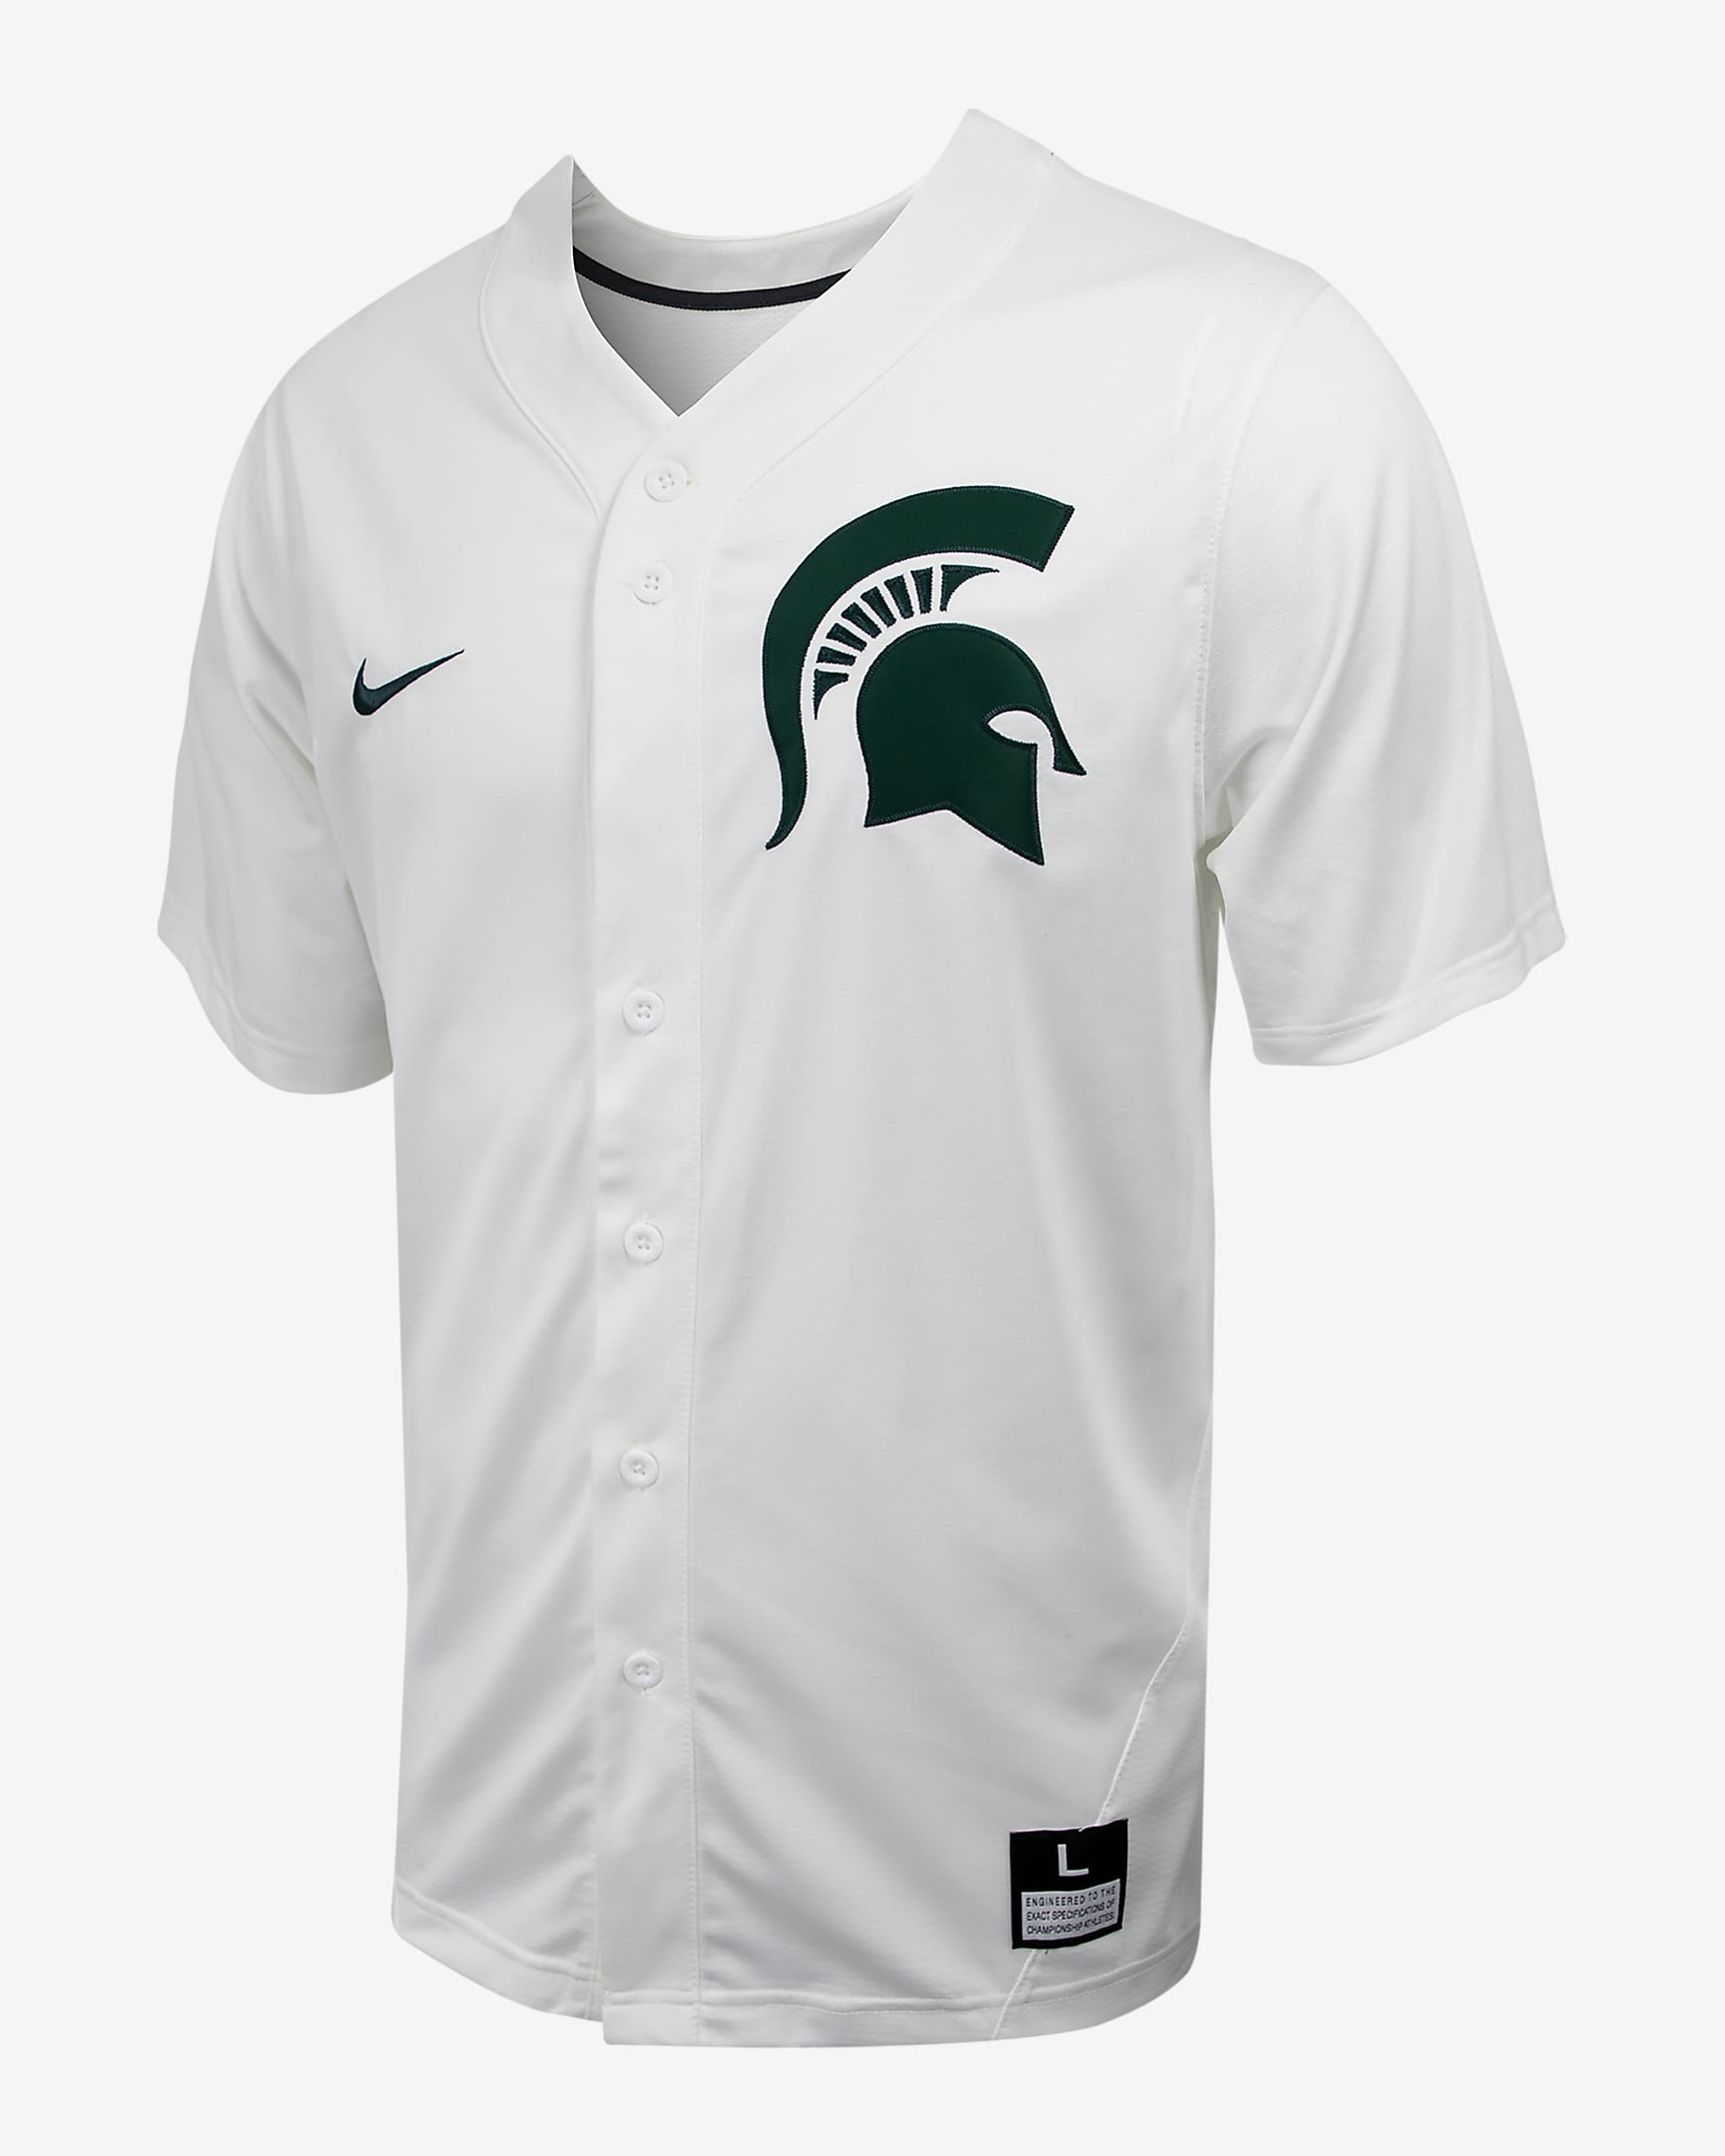 michigan-state-men-s-nike-college-full-button-baseball-jersey-nike